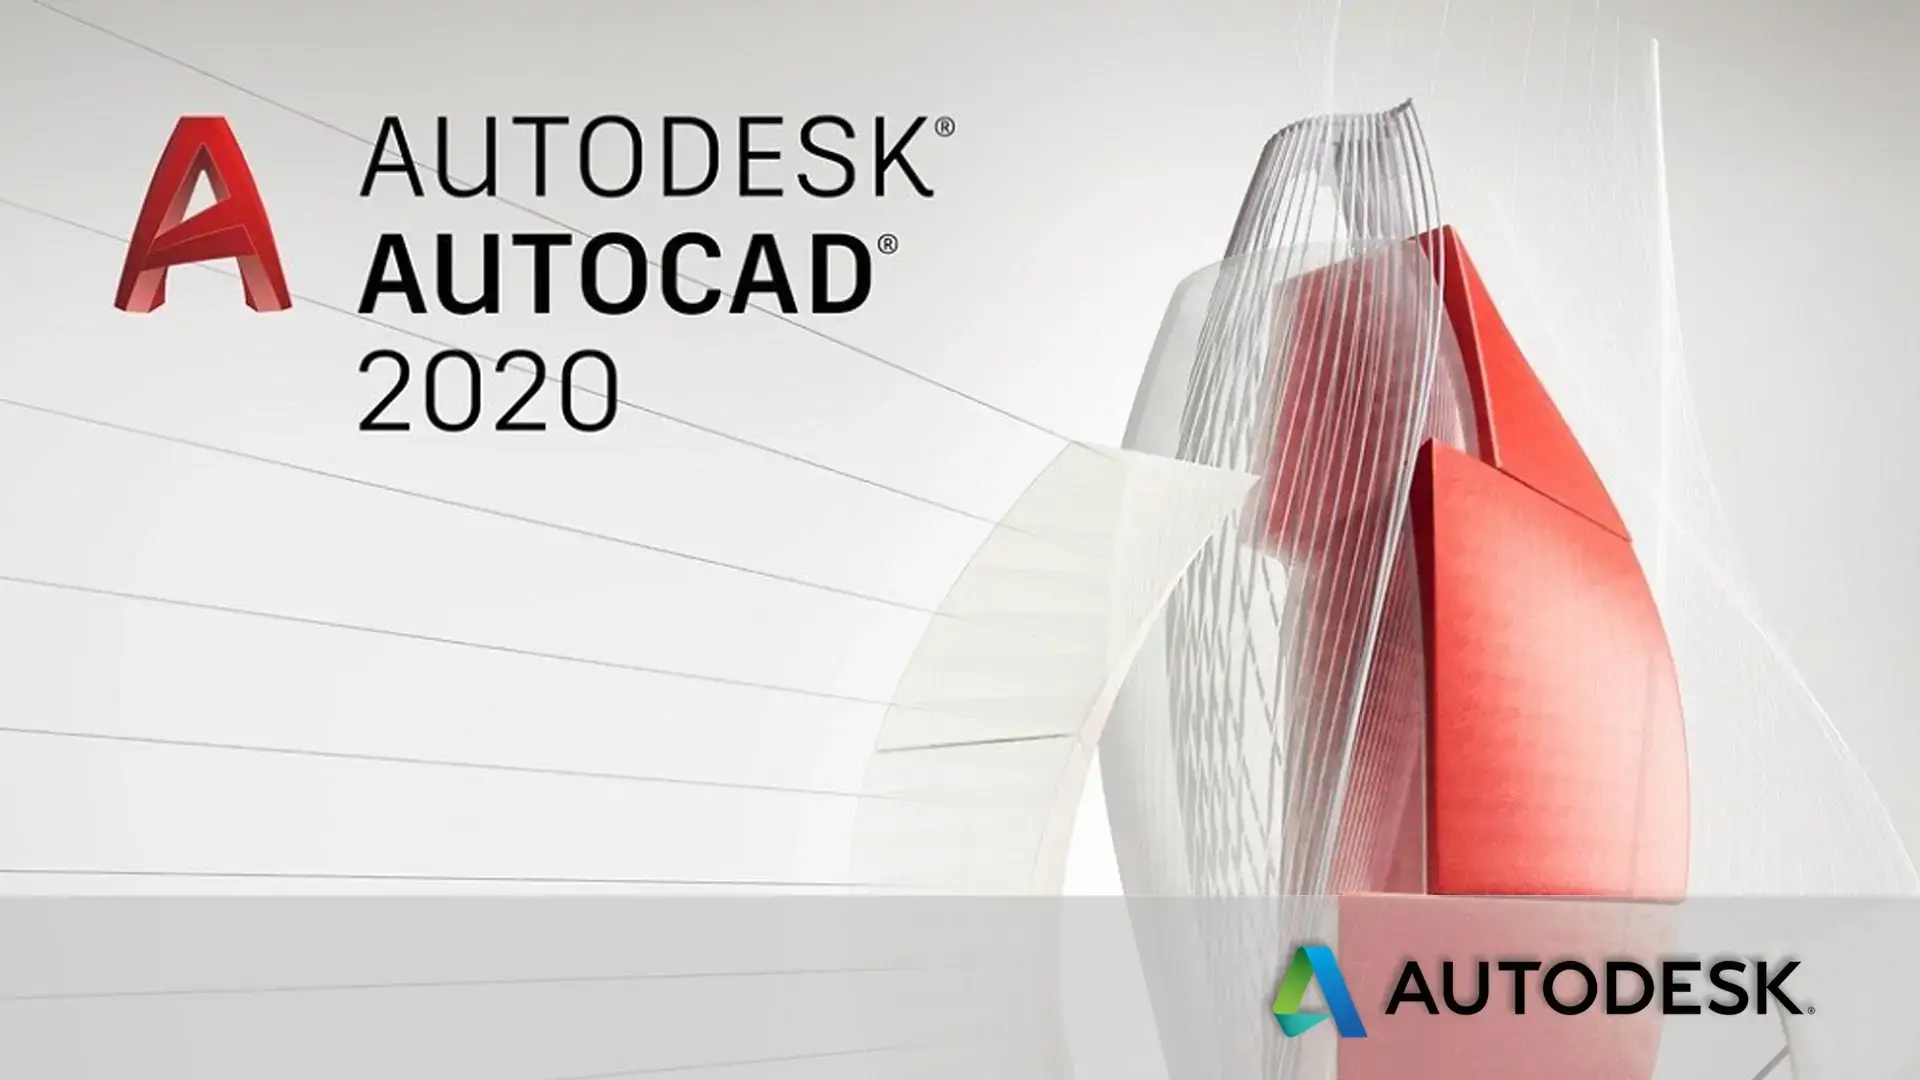 Ativador AutoCAD 2020